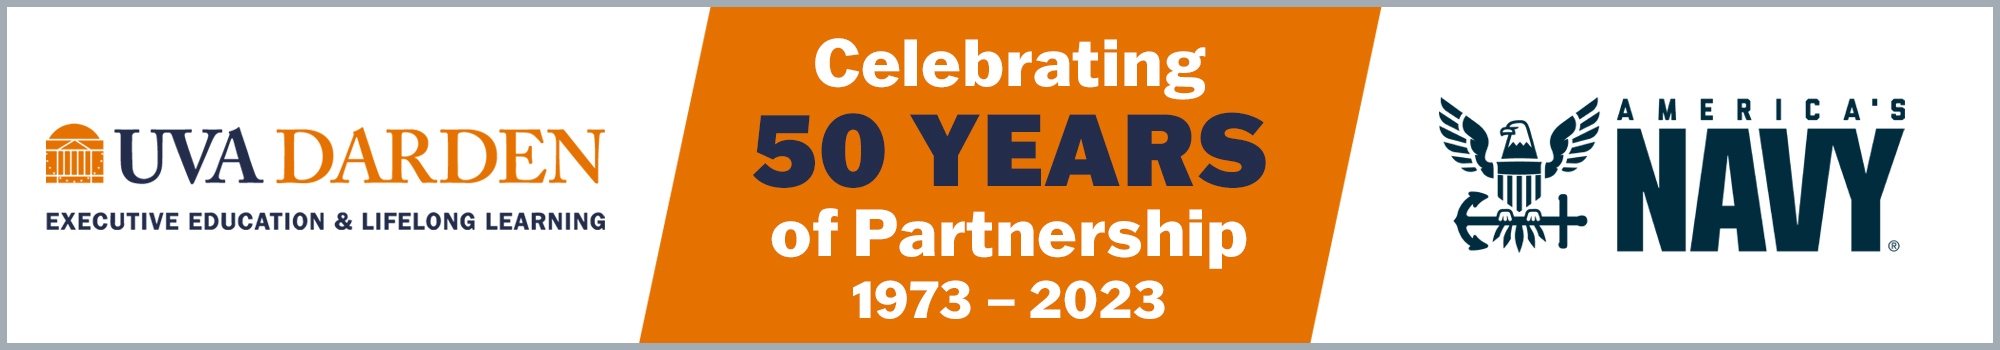 UVA Darden and US Navy 50 Years of Partnership